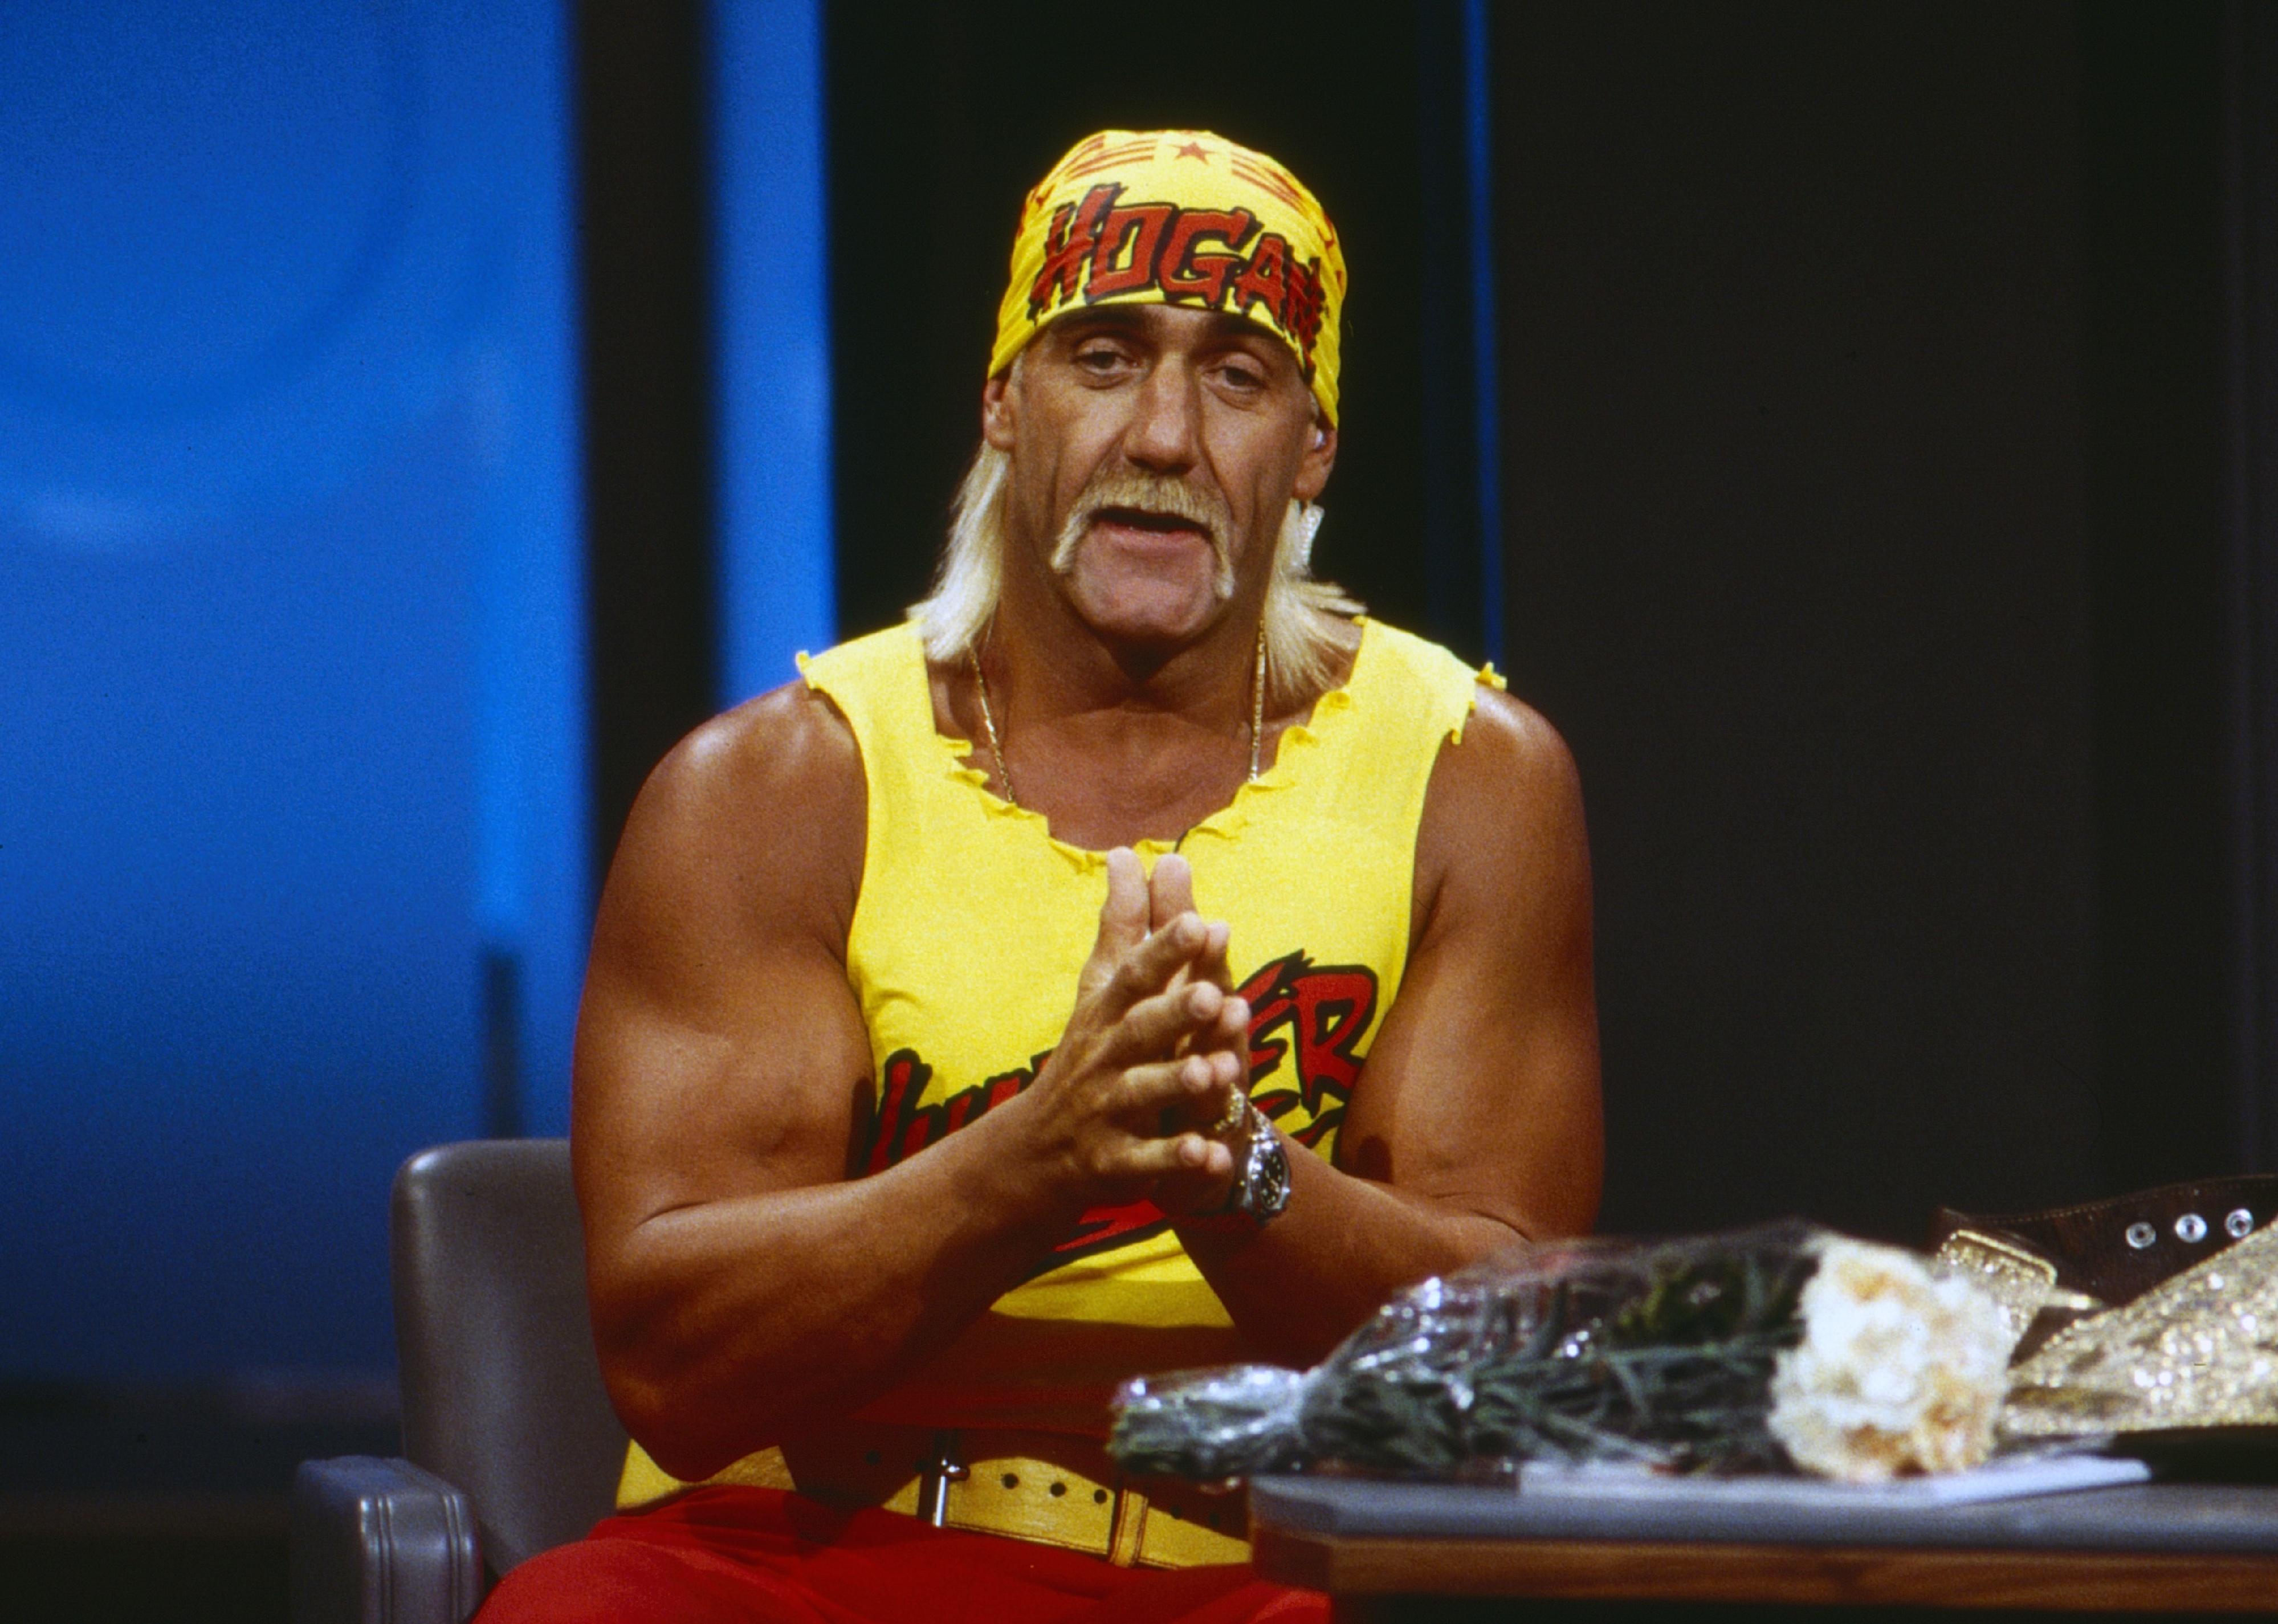 Wrestler Hulk Hogan on a talk show.